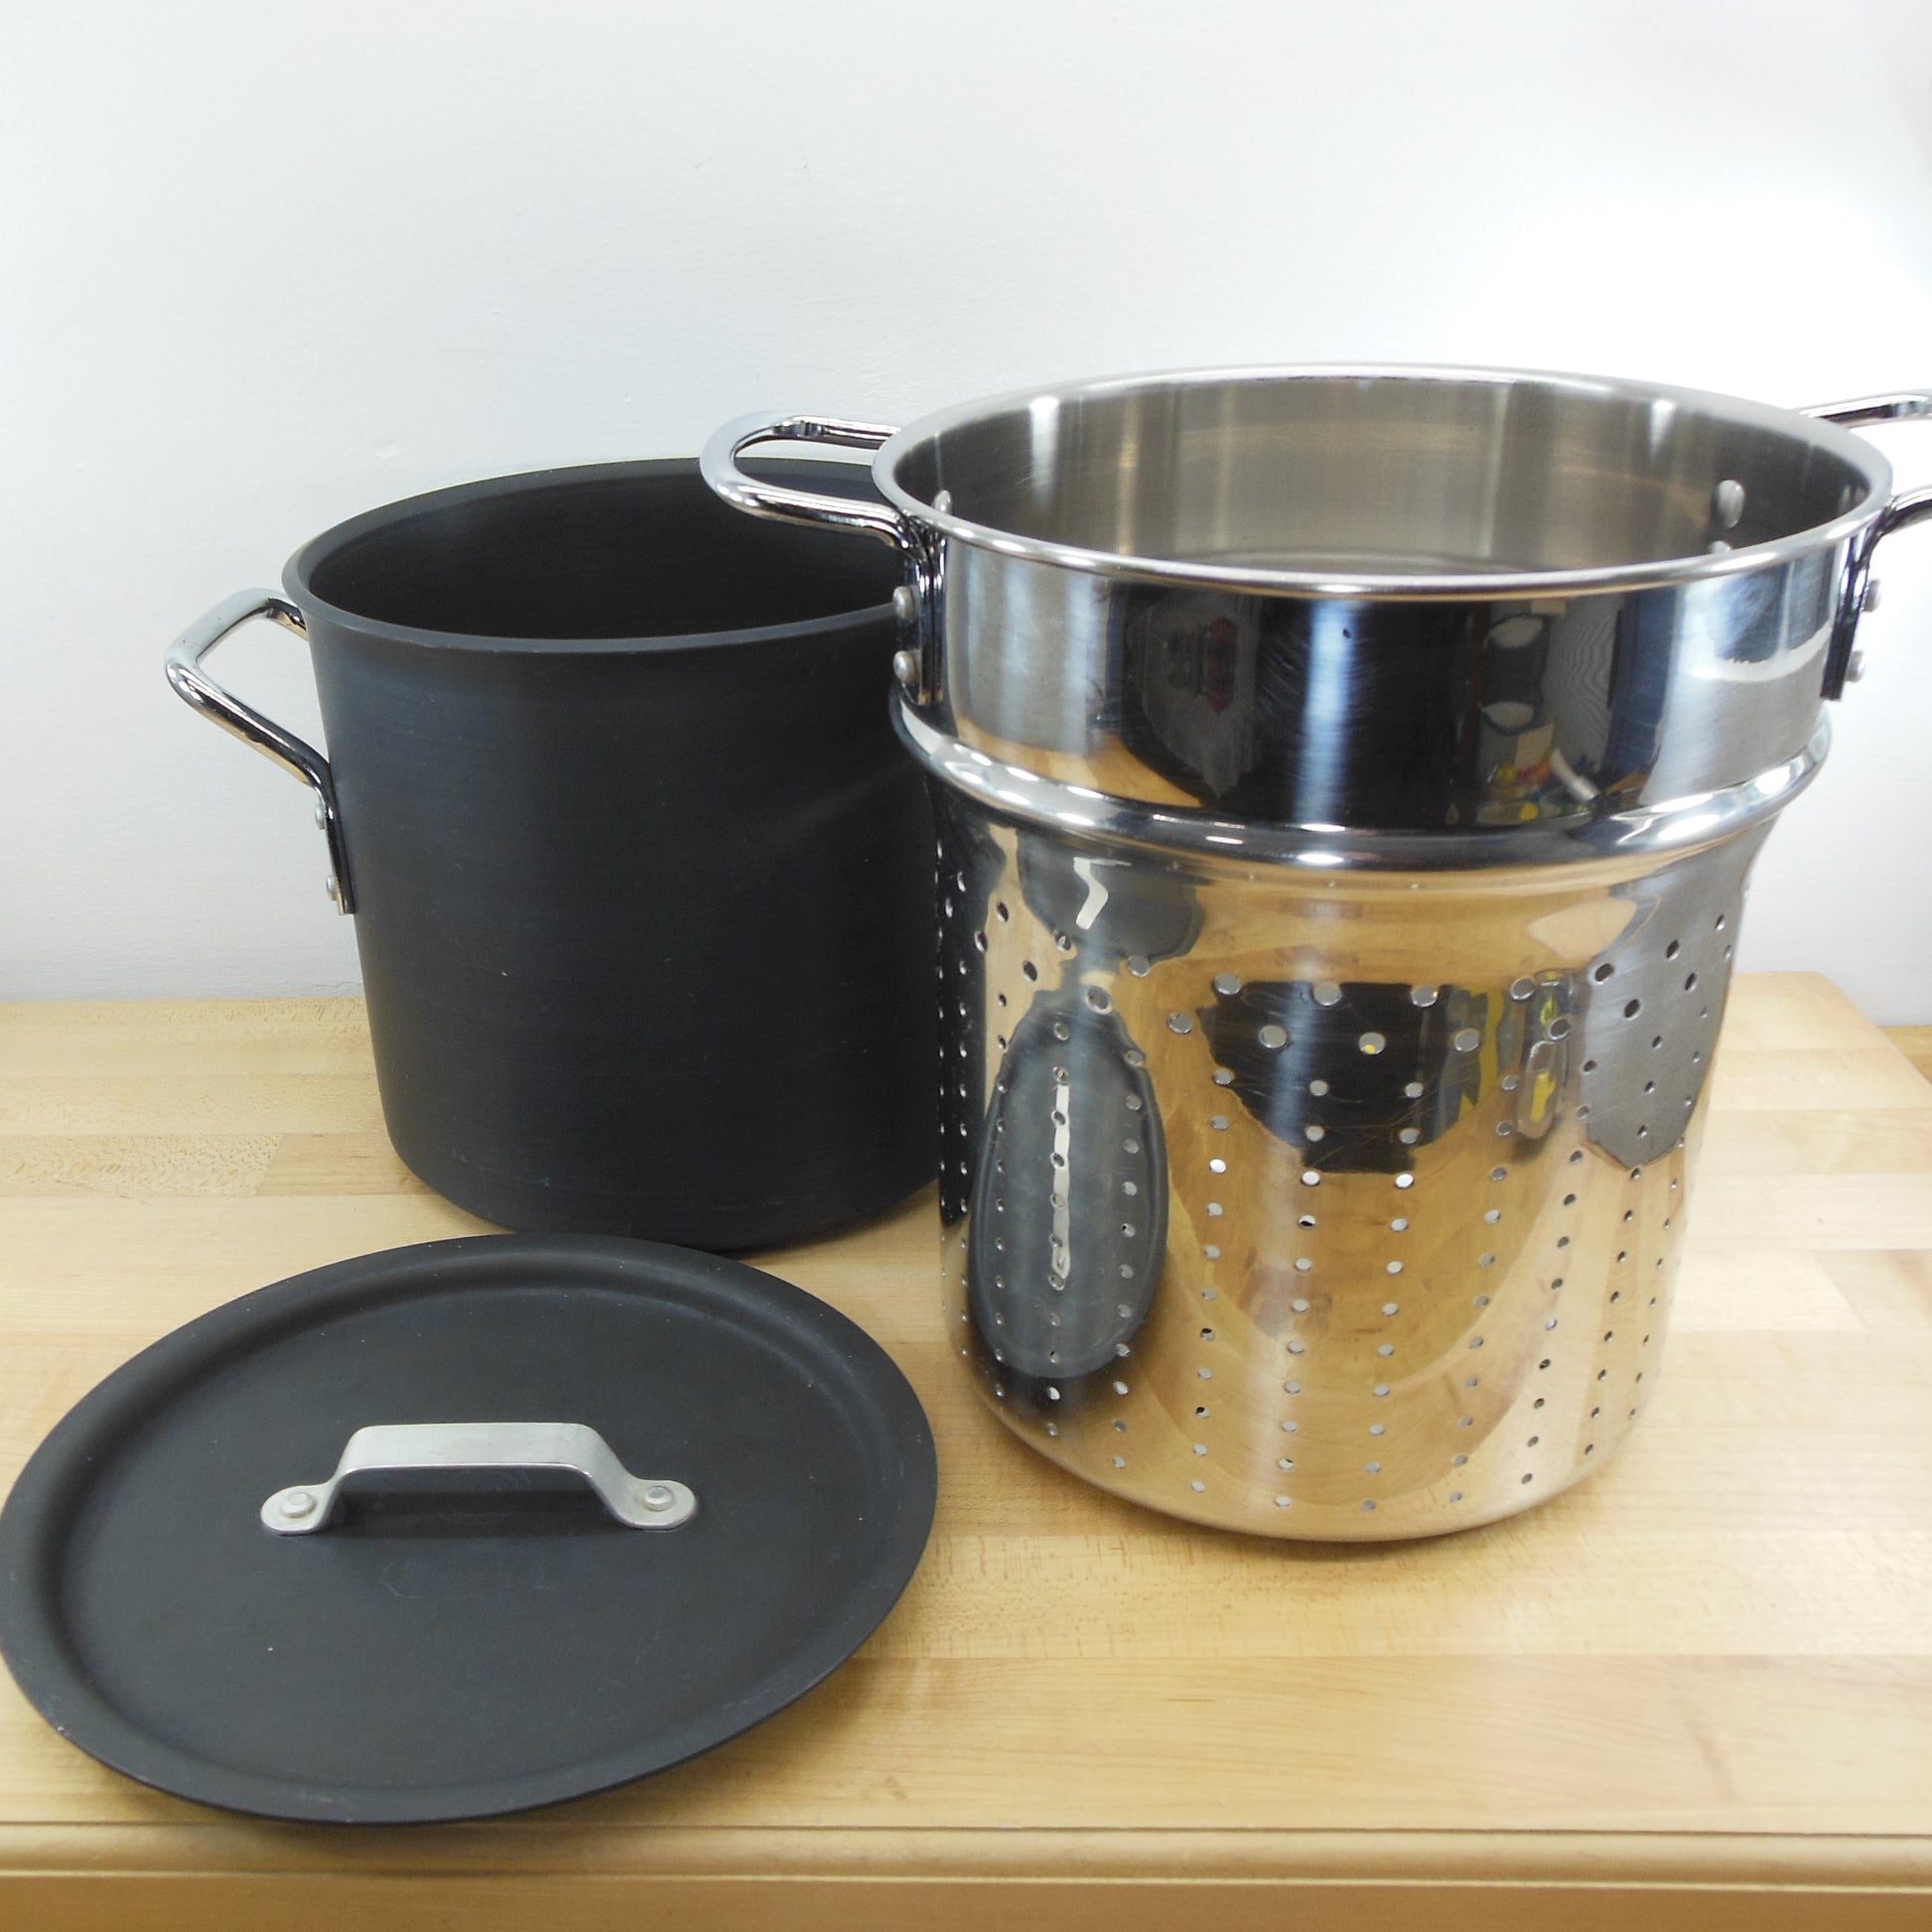 Calphalon Contemporary Nonstick 8-Quart Pasta Pot with Steamer